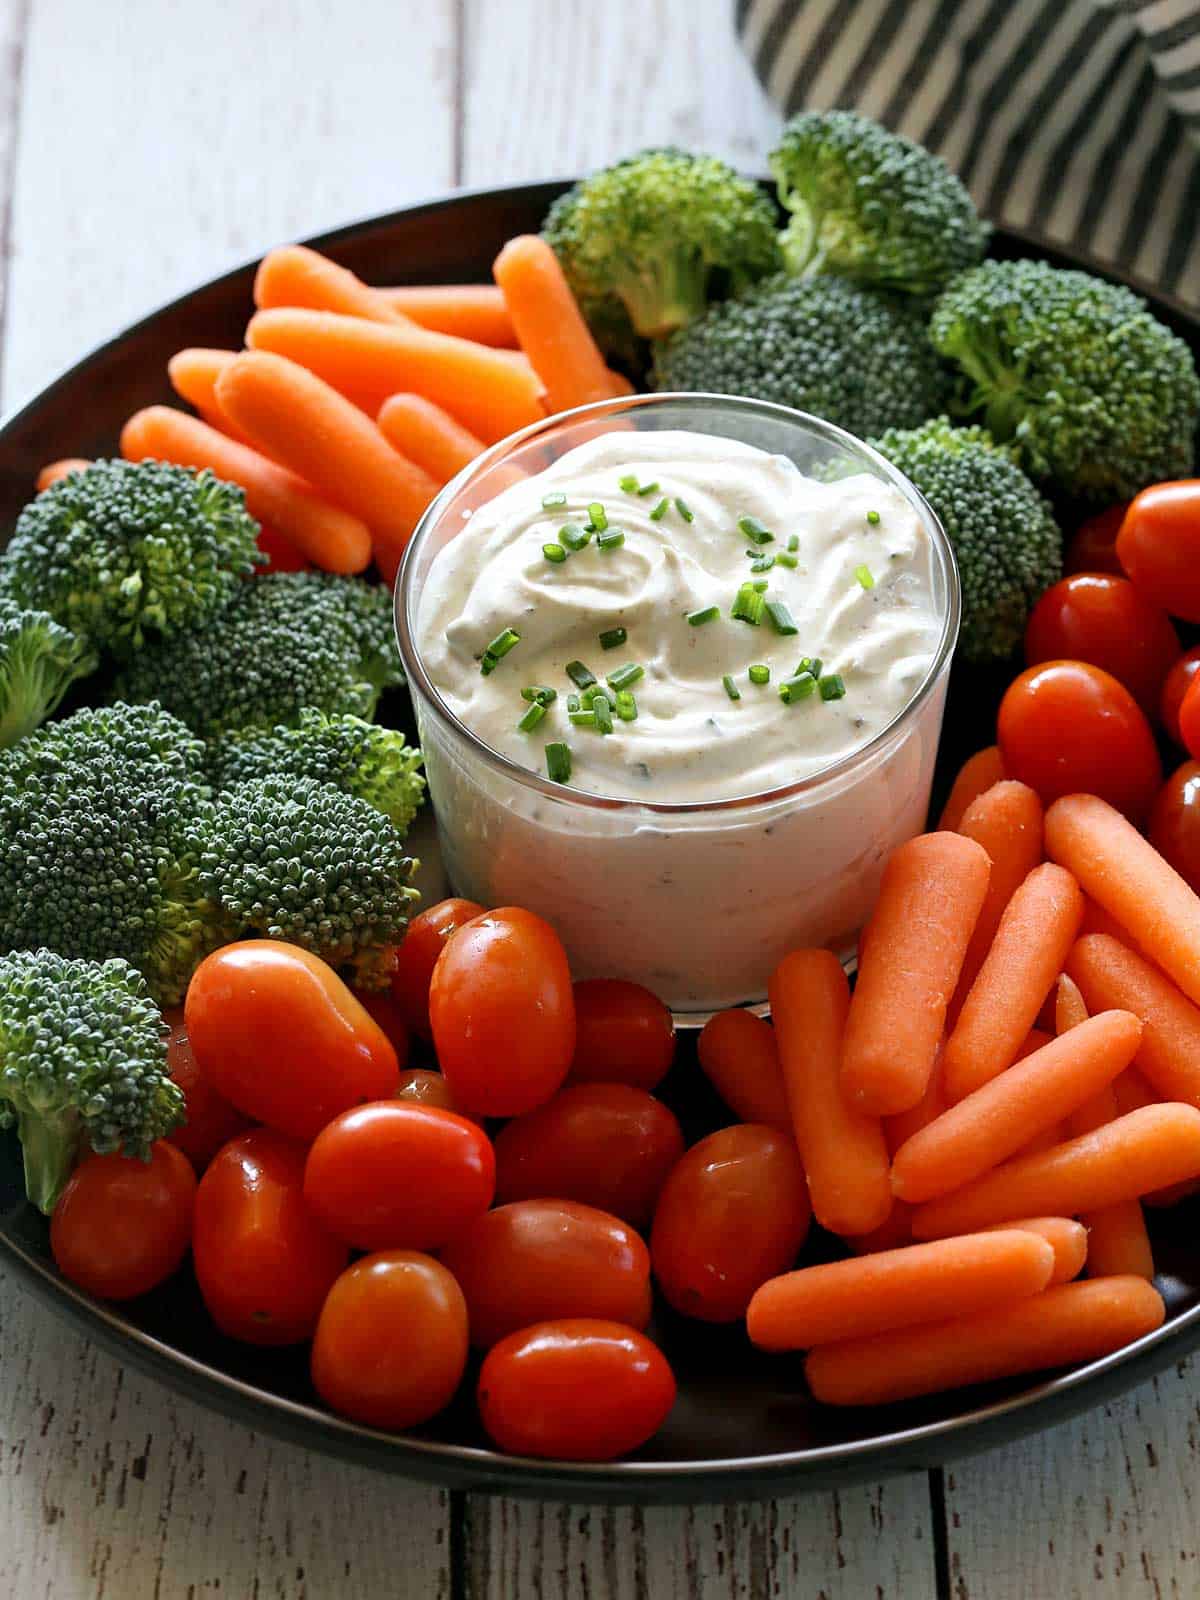 Sour cream dip served with fresh veggies.